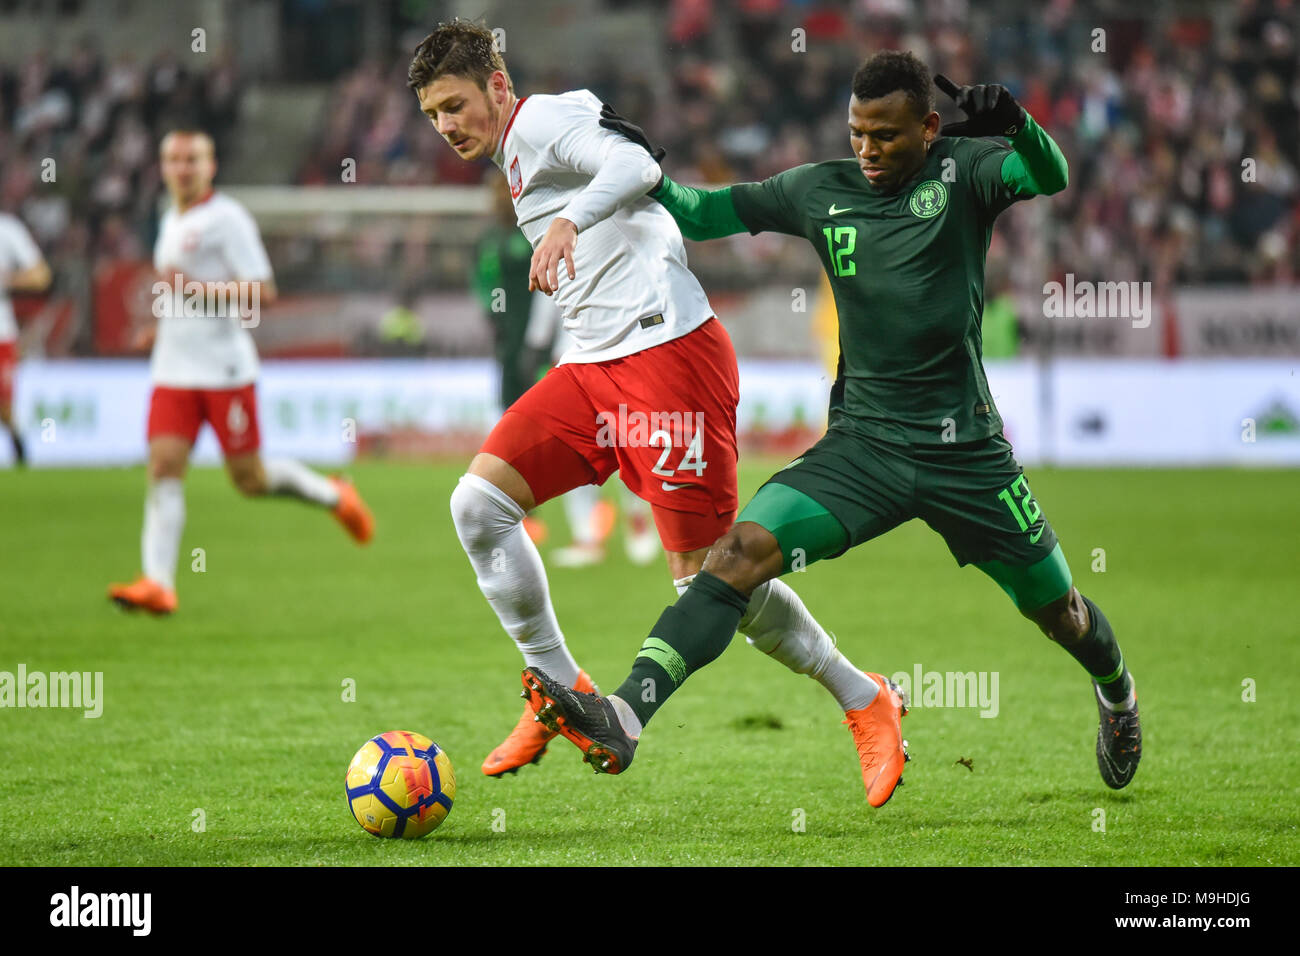 WROCLAW, POLAND - MARCH 23, 2018: Friendly match Poland vs Nigeria 0:1. In action Dawid Kownacki (L) and Abdullahi Shehu (R). Stock Photo